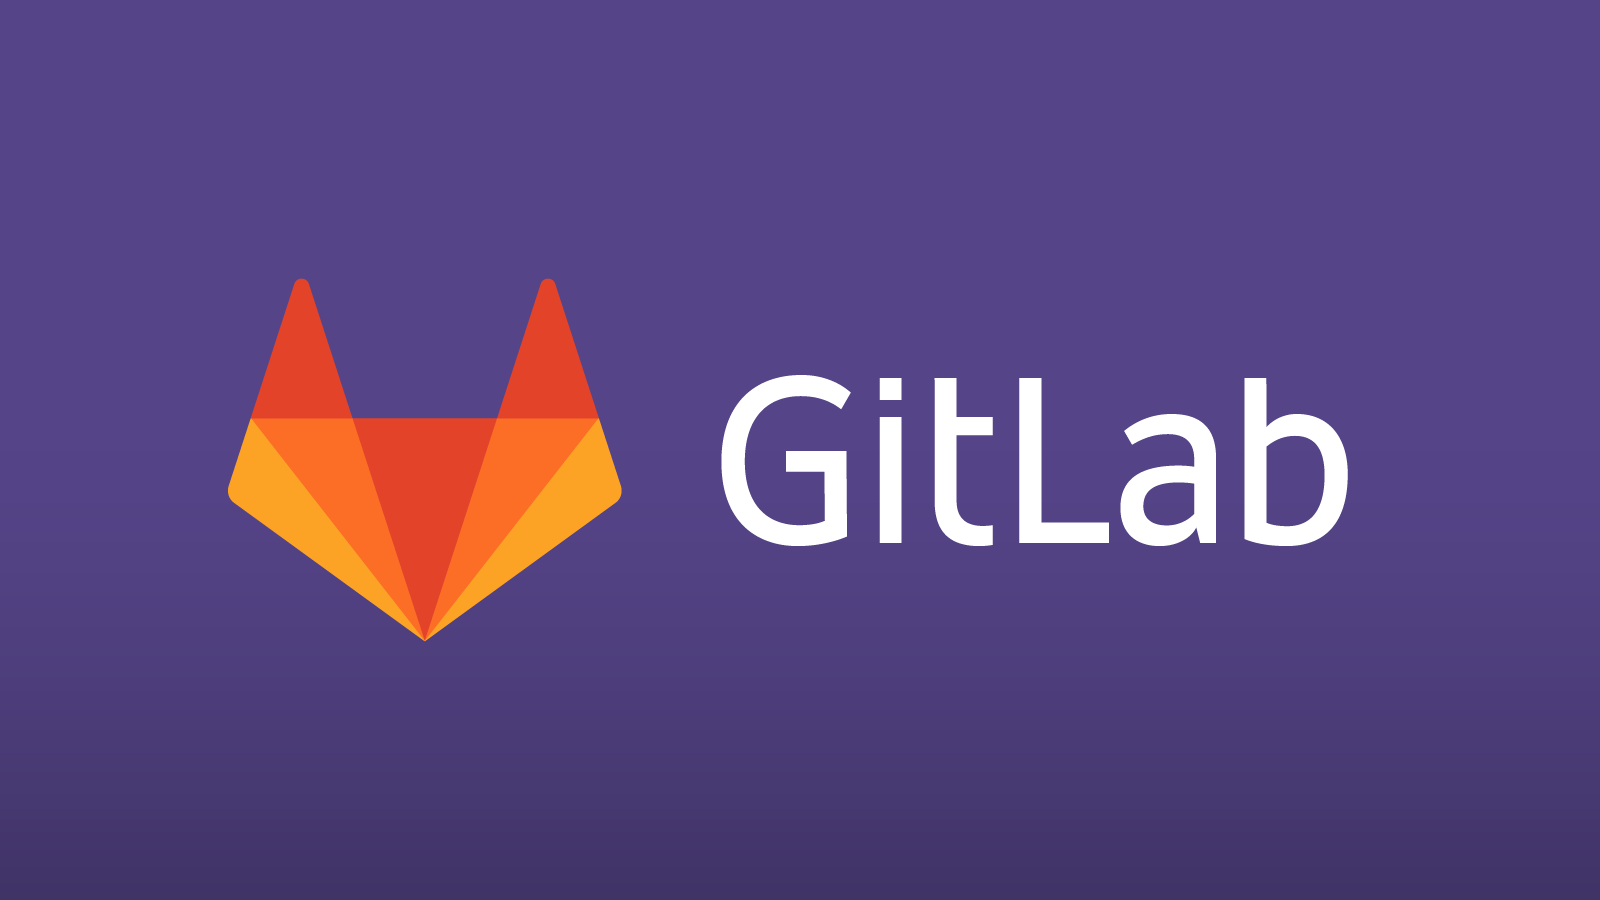 GitLab stock